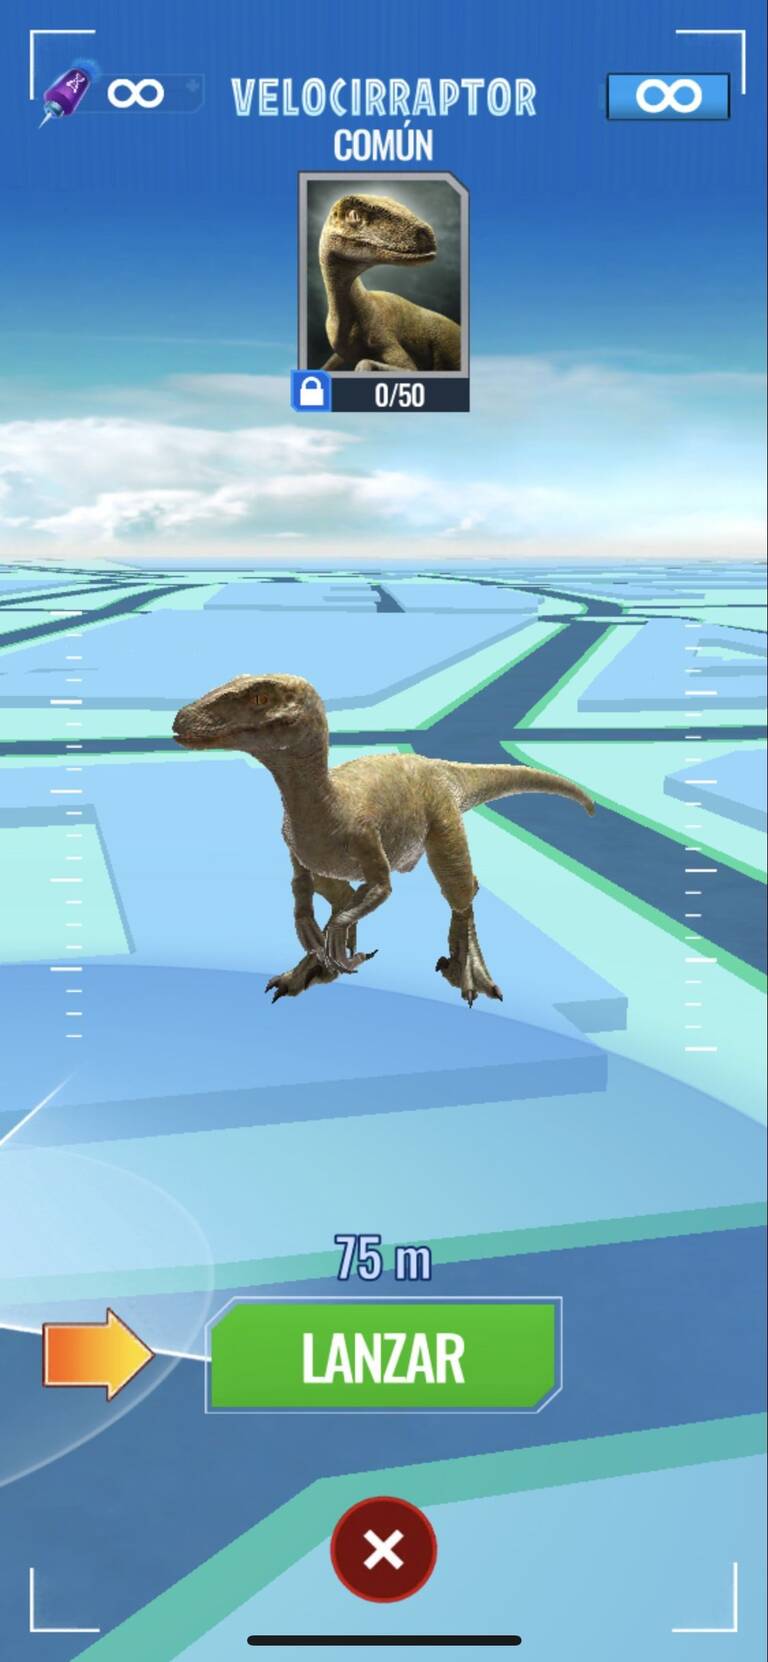 Análise: Jurassic World Alive (Android/iOS) aprende com os erros de Pokémon  GO (Android/iOS) - GameBlast